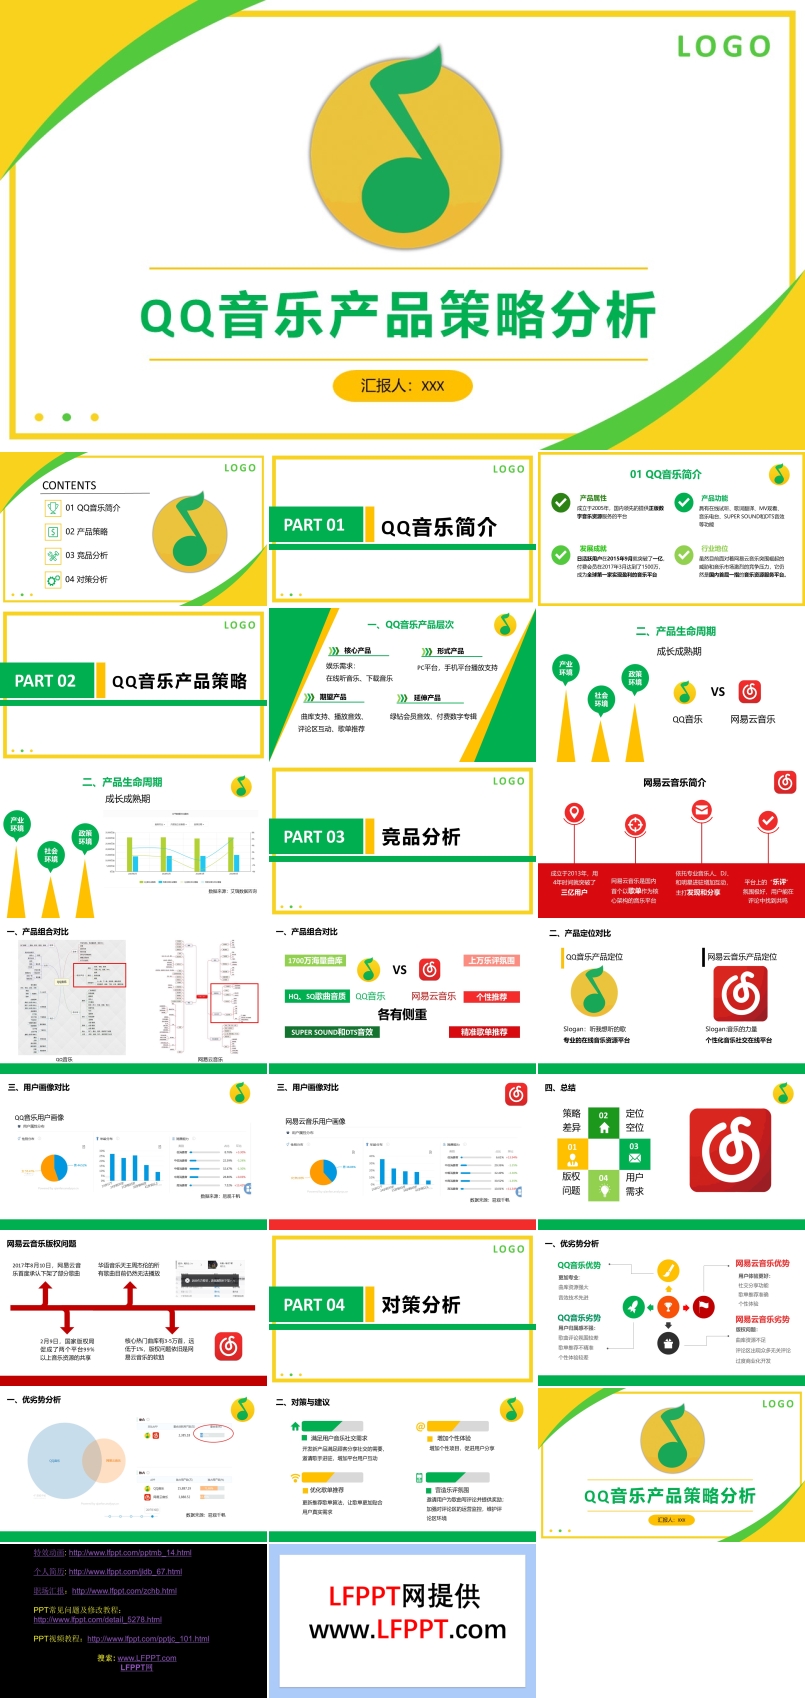 QQ音乐产品策略市场营销策划分析报告PPT模板商业市场分析